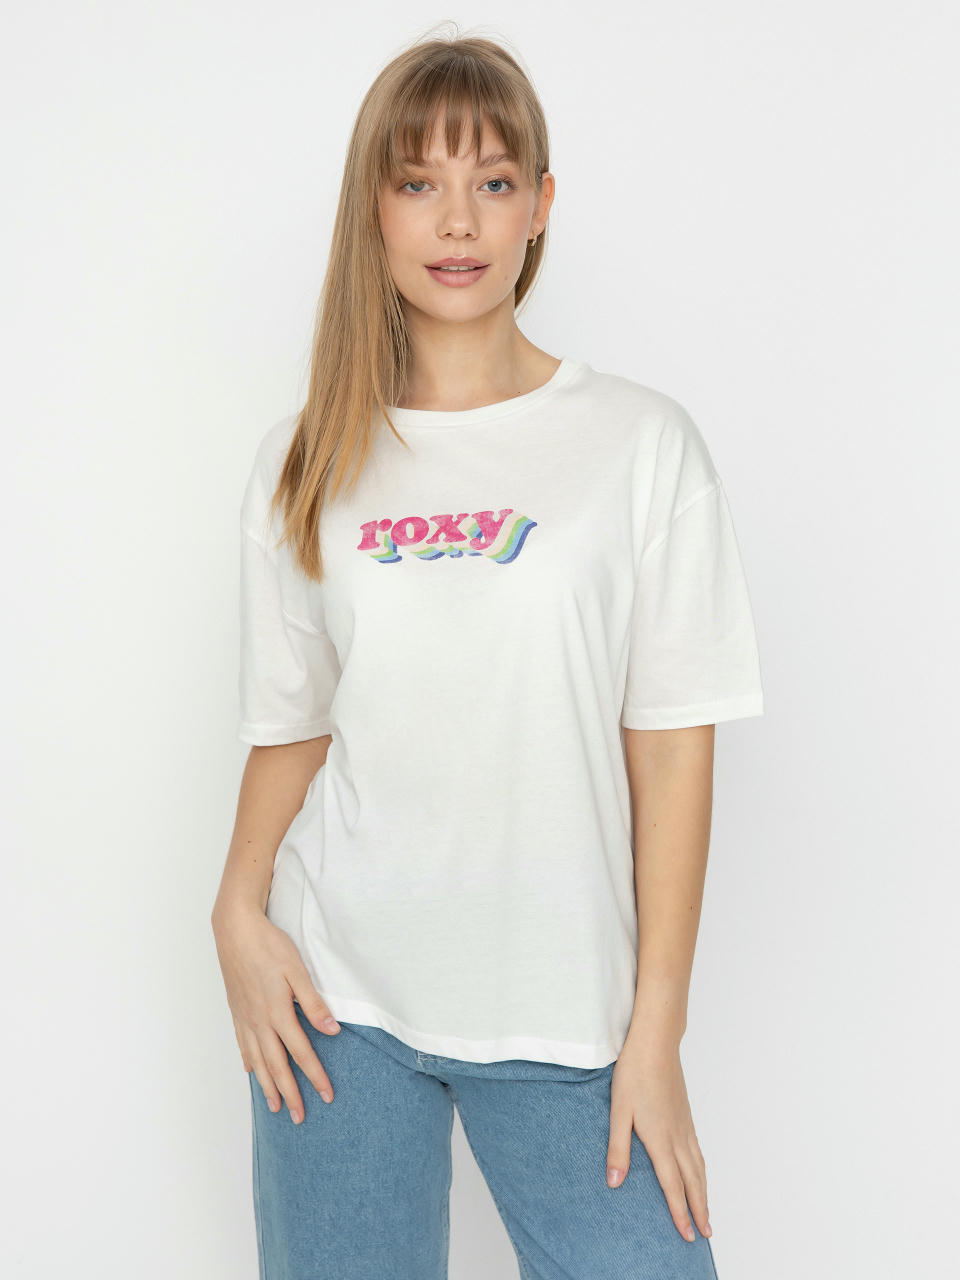 Roxy T-Shirt Sand Under The Sky Wmn (snow white)